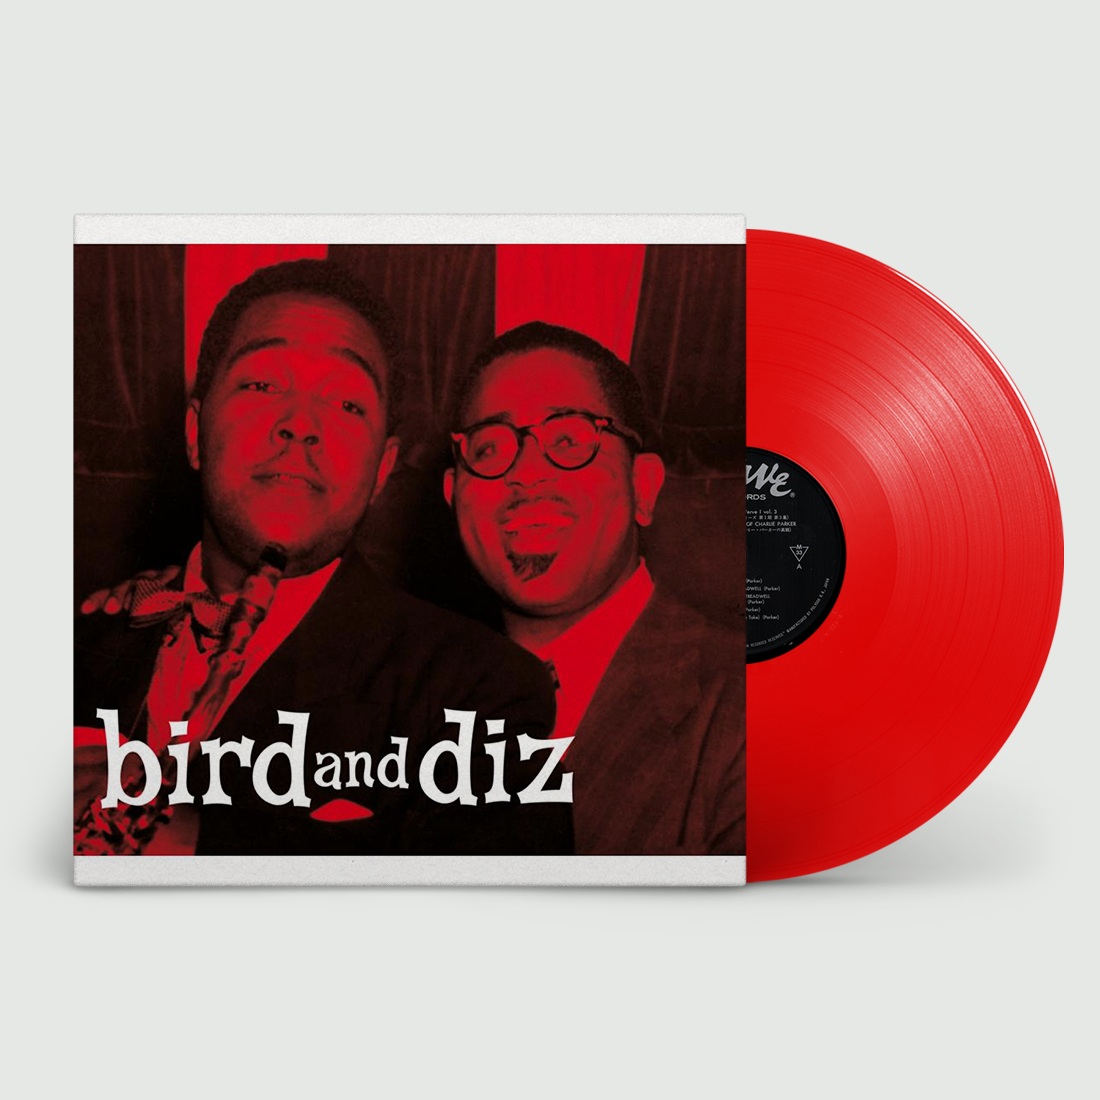 Bird and Diz: Limited Edition 180gm Red Vinyl LP (Centennial Celebration Collection)